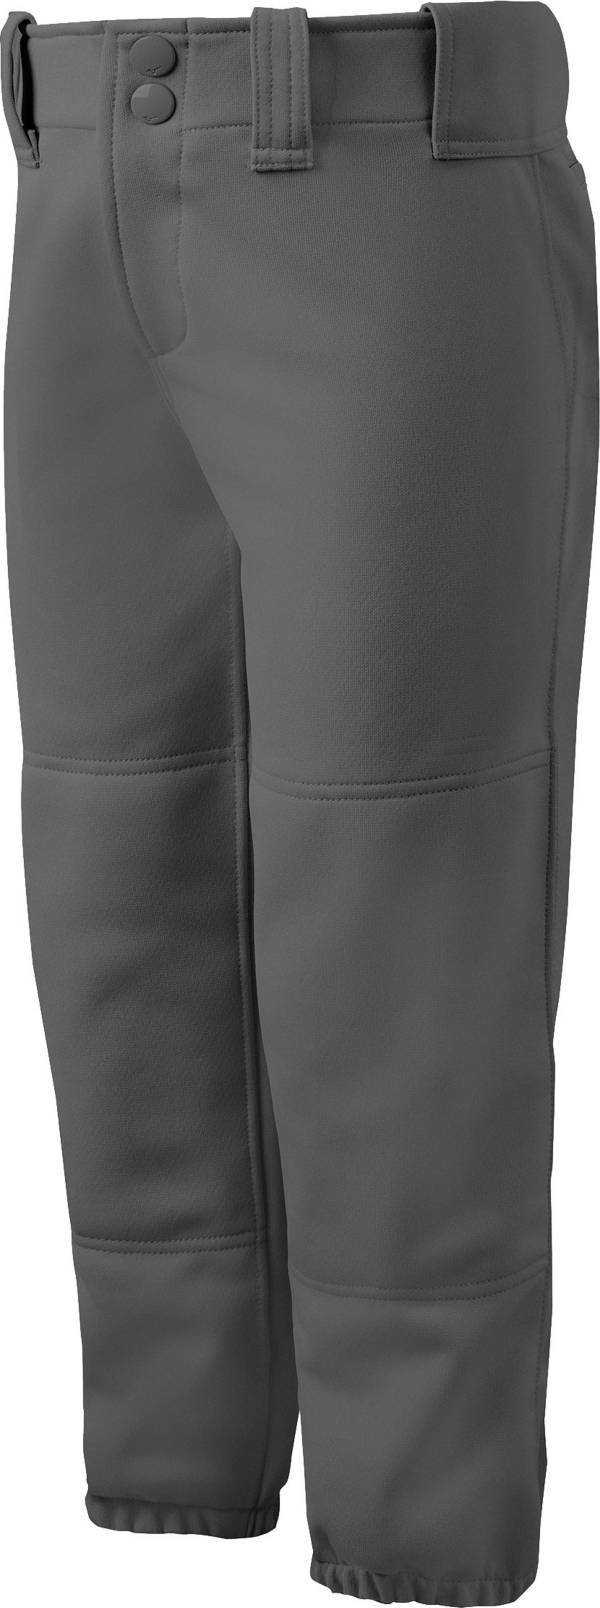 Mizuno Women's Select Low Rise Softball Pants w/ Belt Loops product image